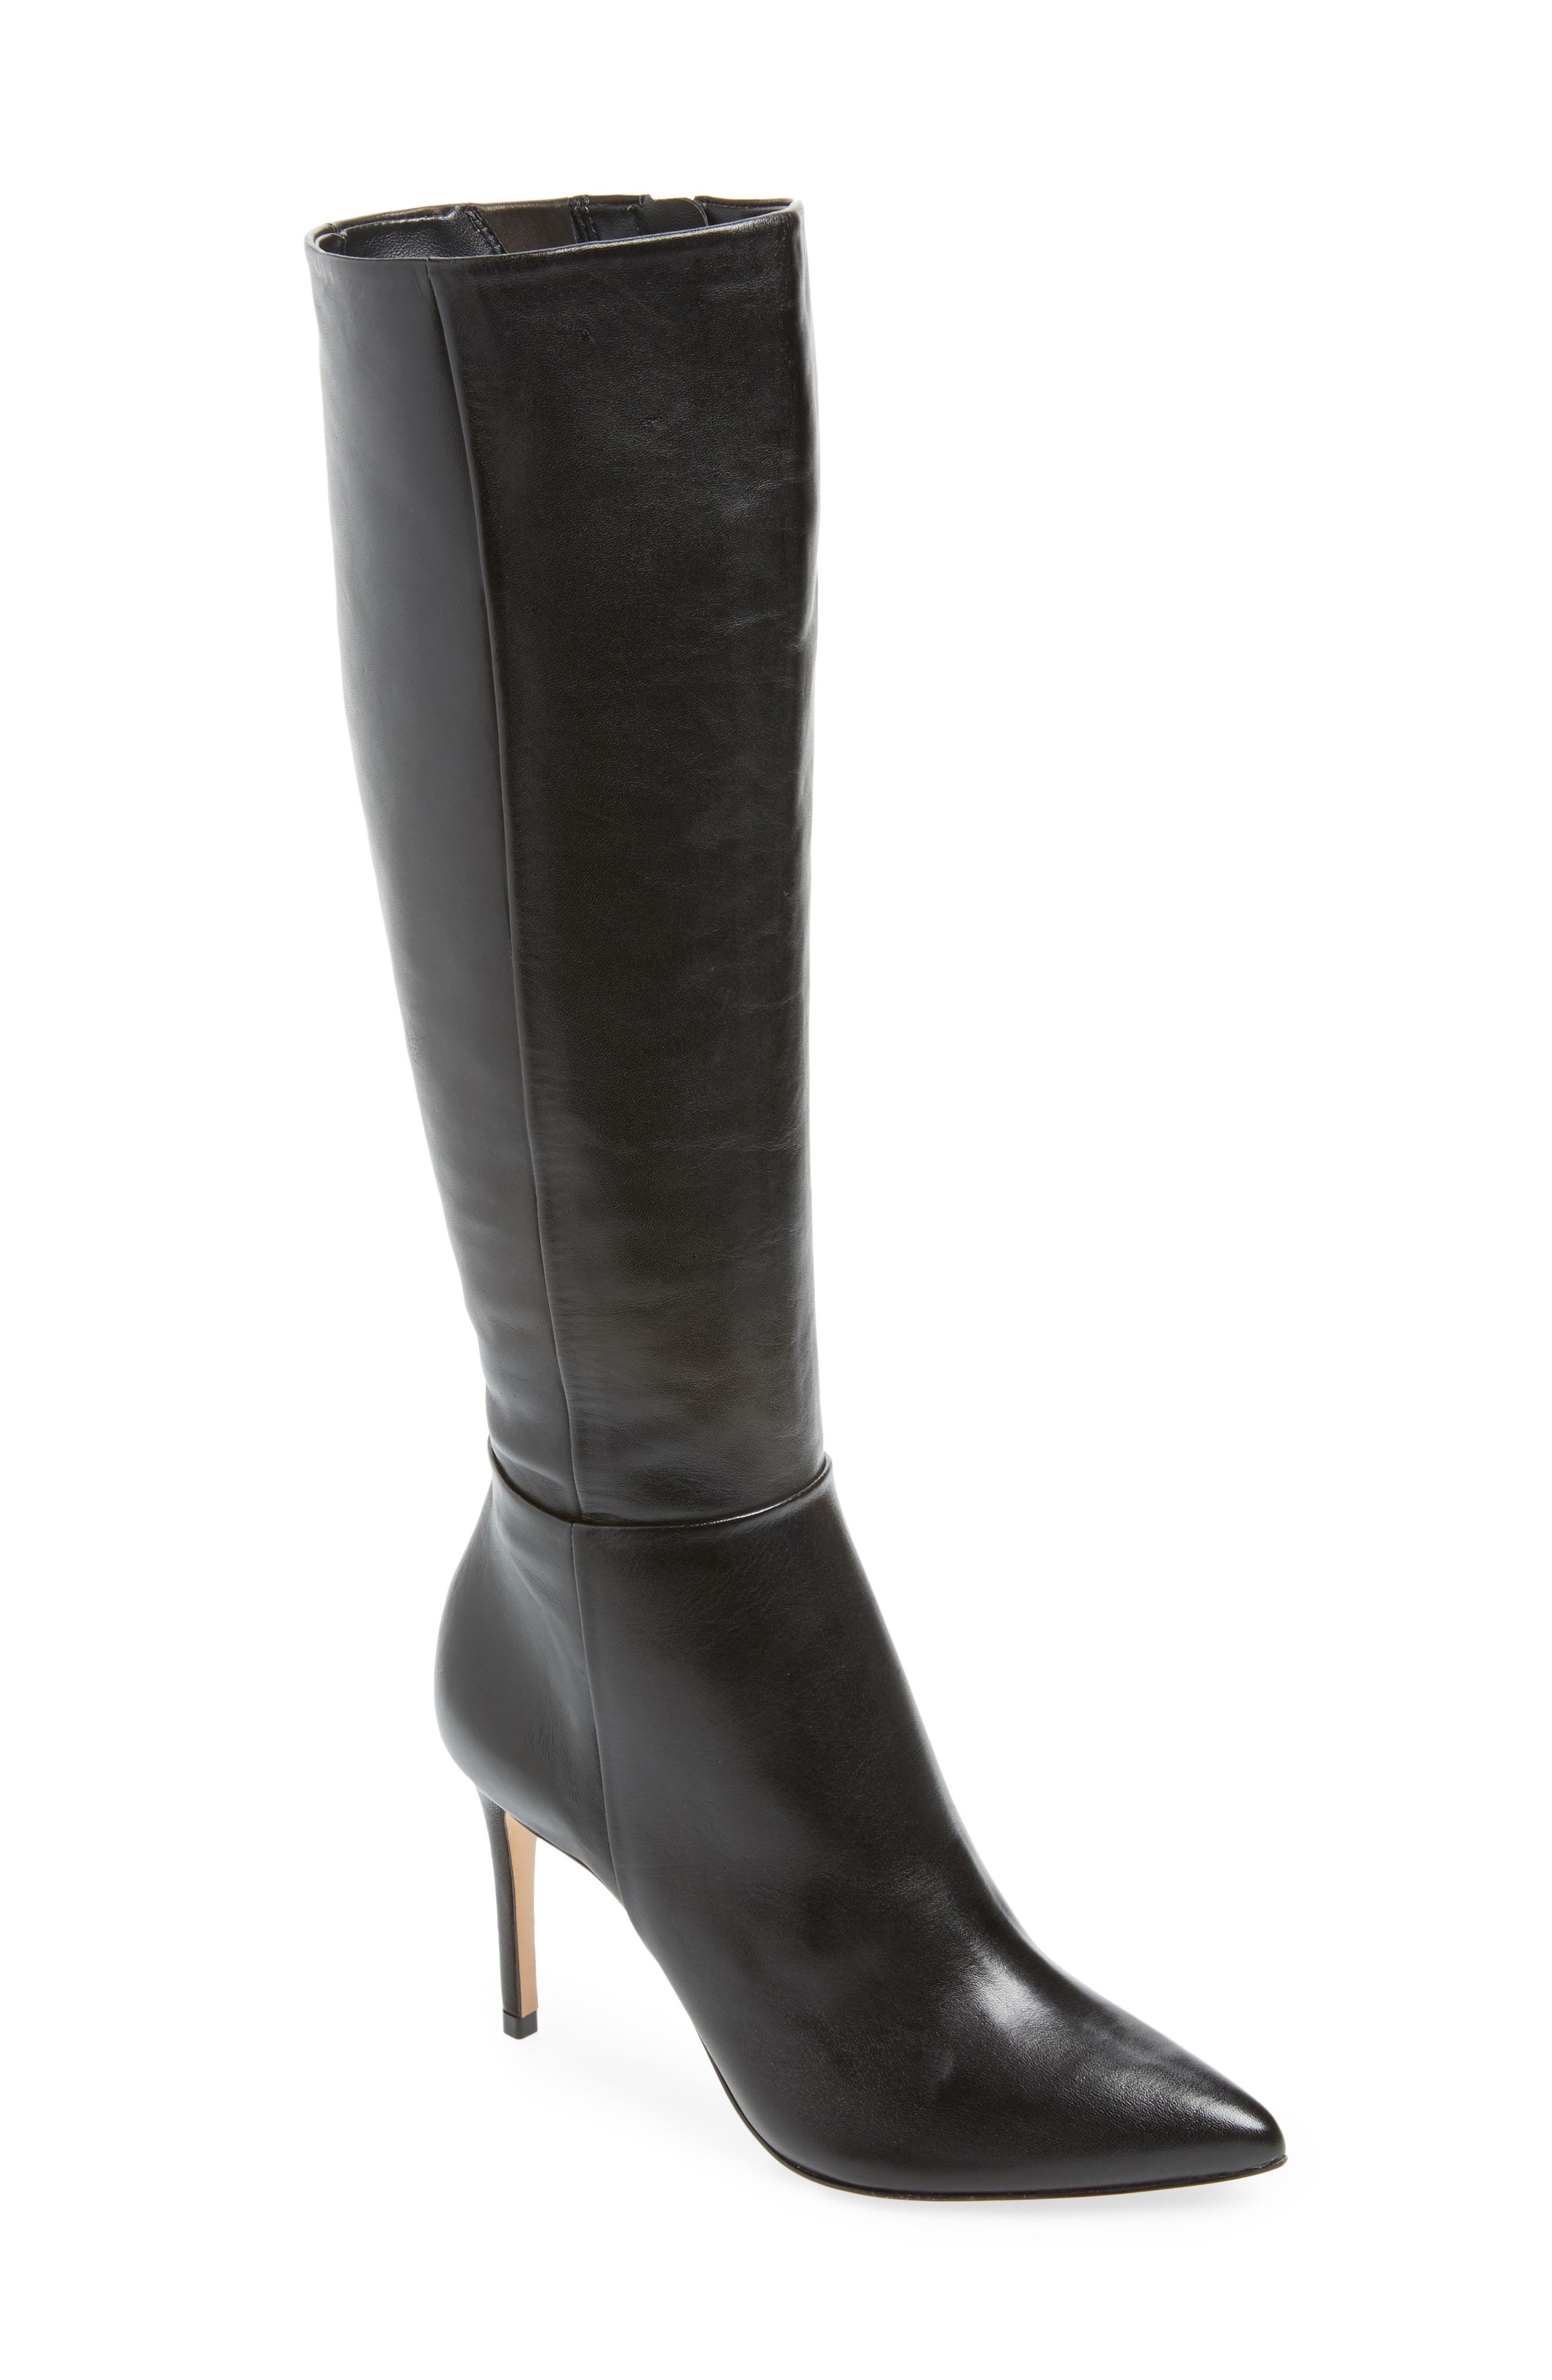 schutz leather boots